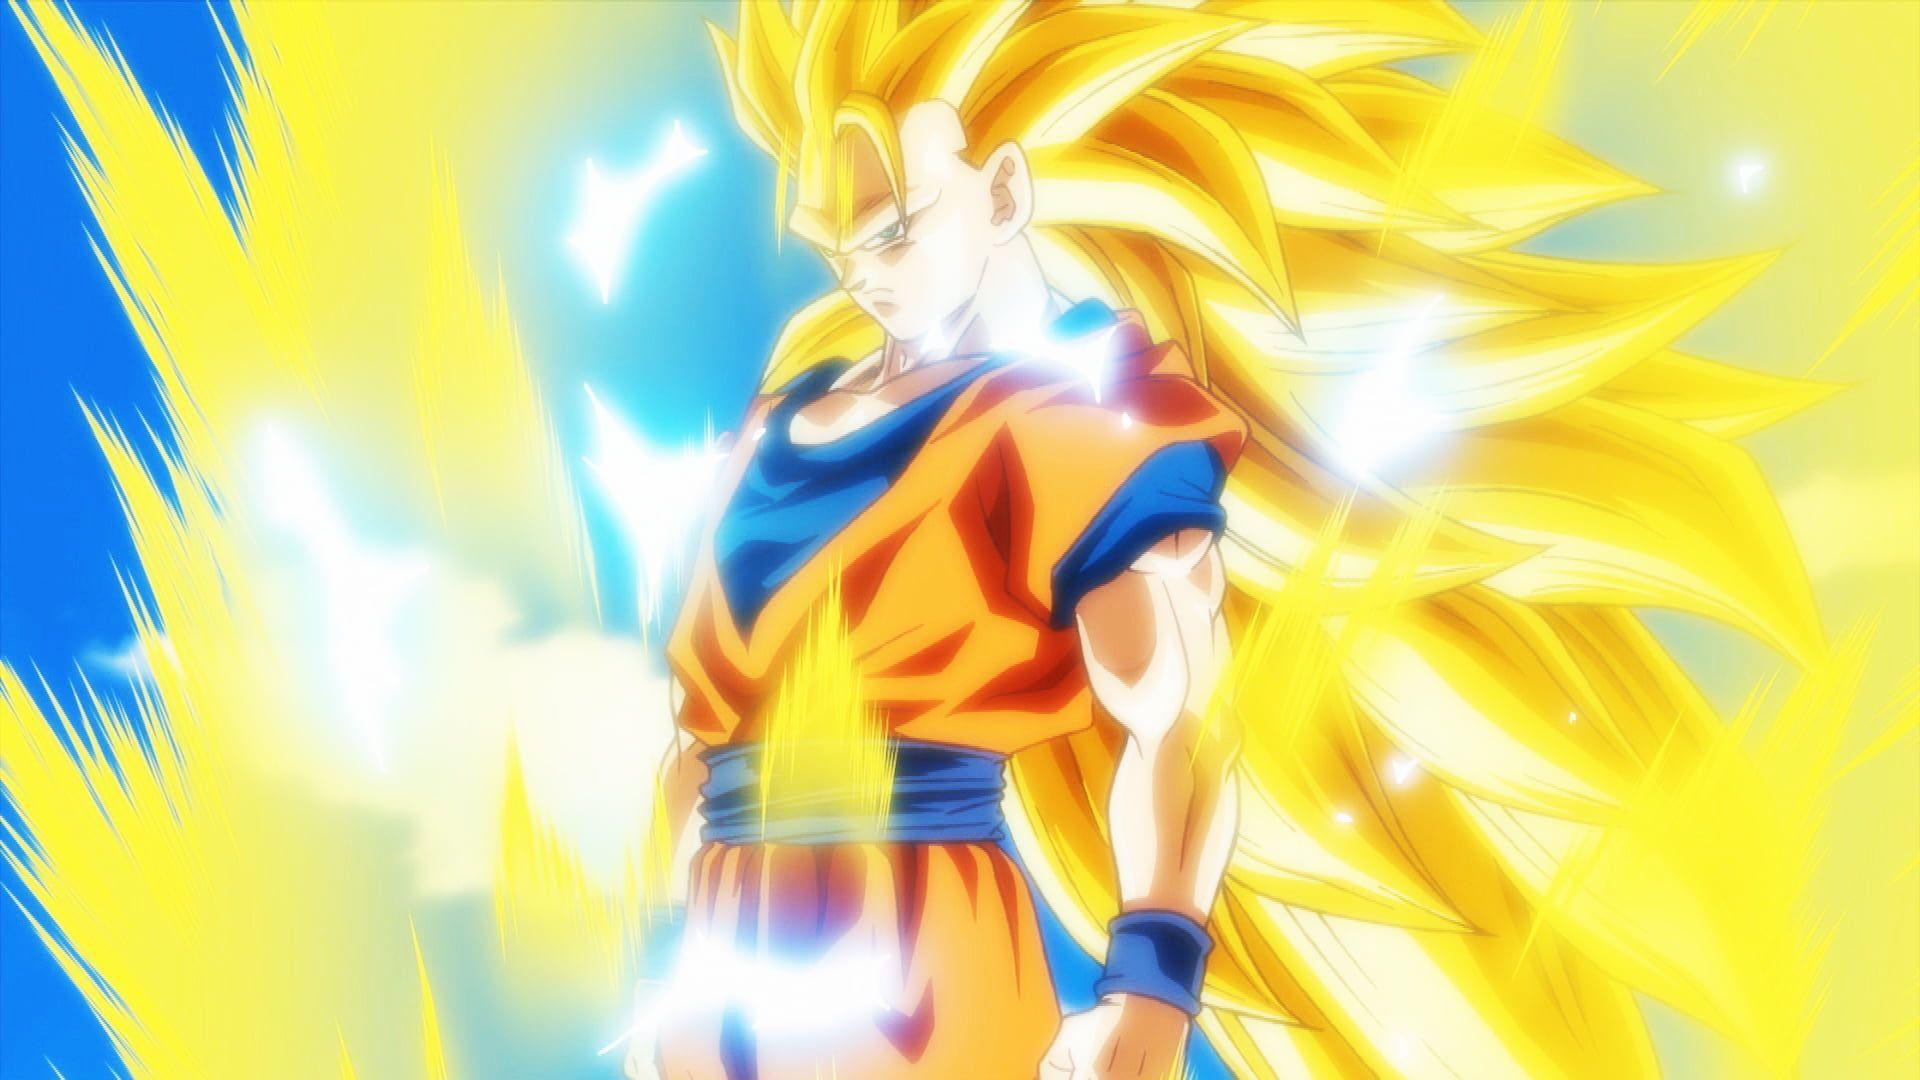 Super Saiyan 3 Goku wallpaper by Ethanoil - Download on ZEDGE™